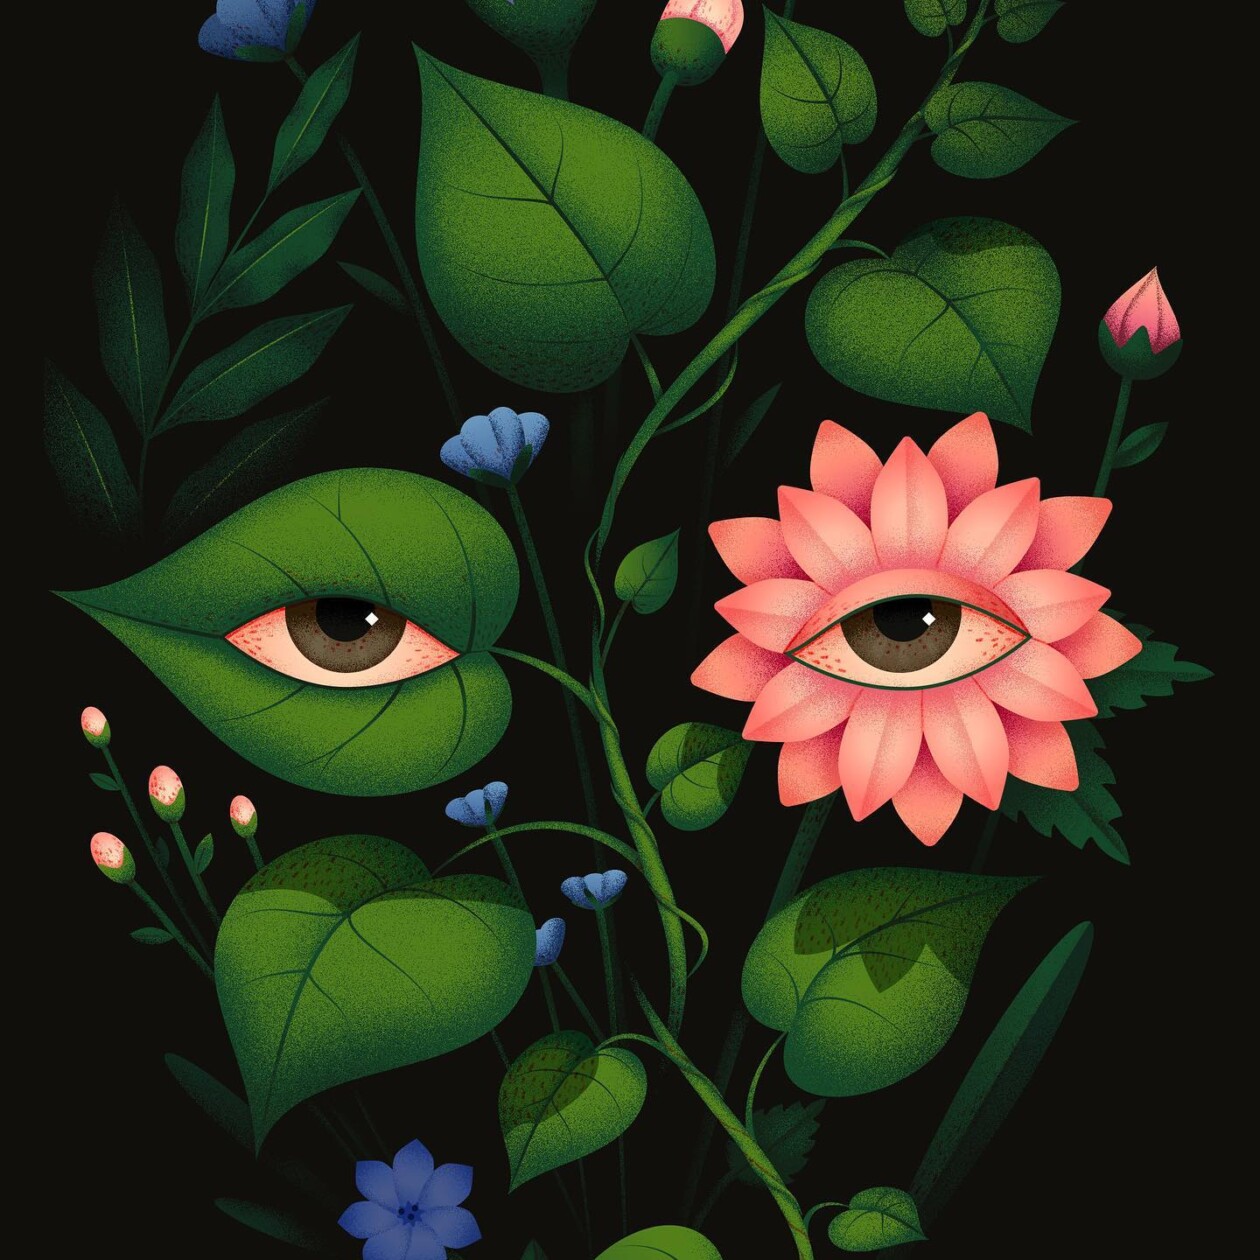 Marvelous Surrealistic Illustrations Of Eyes Peering From Plants And Animals By Ana Miminoshvili (2)